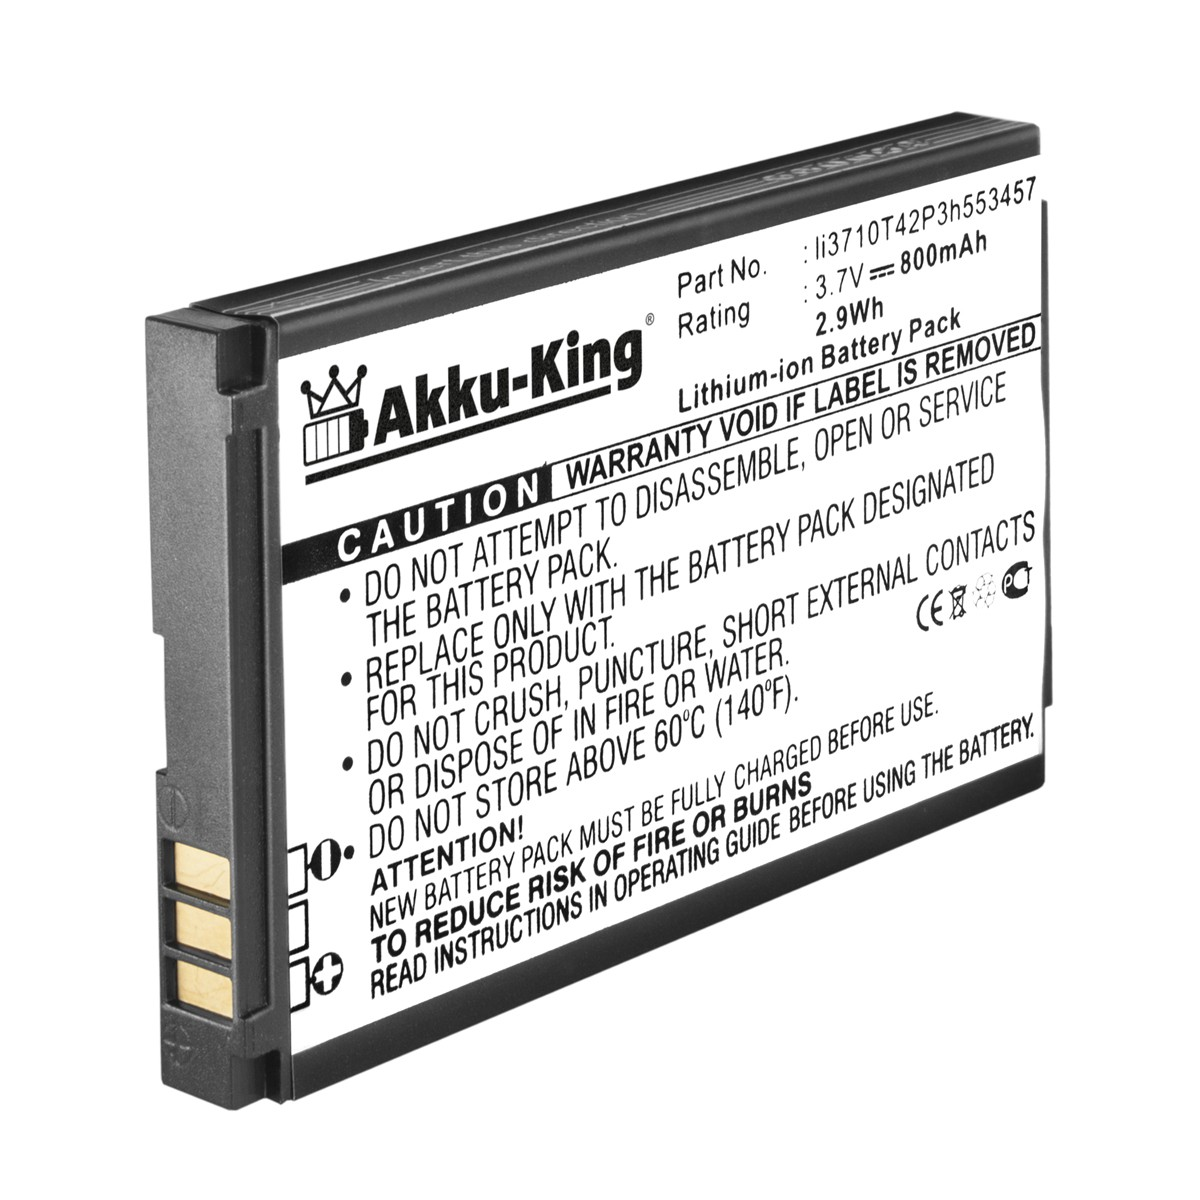 Handy-Akku, kompatibel Volt, mit AKKU-KING Li-Ion ZTE Li3710T42P3h553457 3.7 800mAh Akku